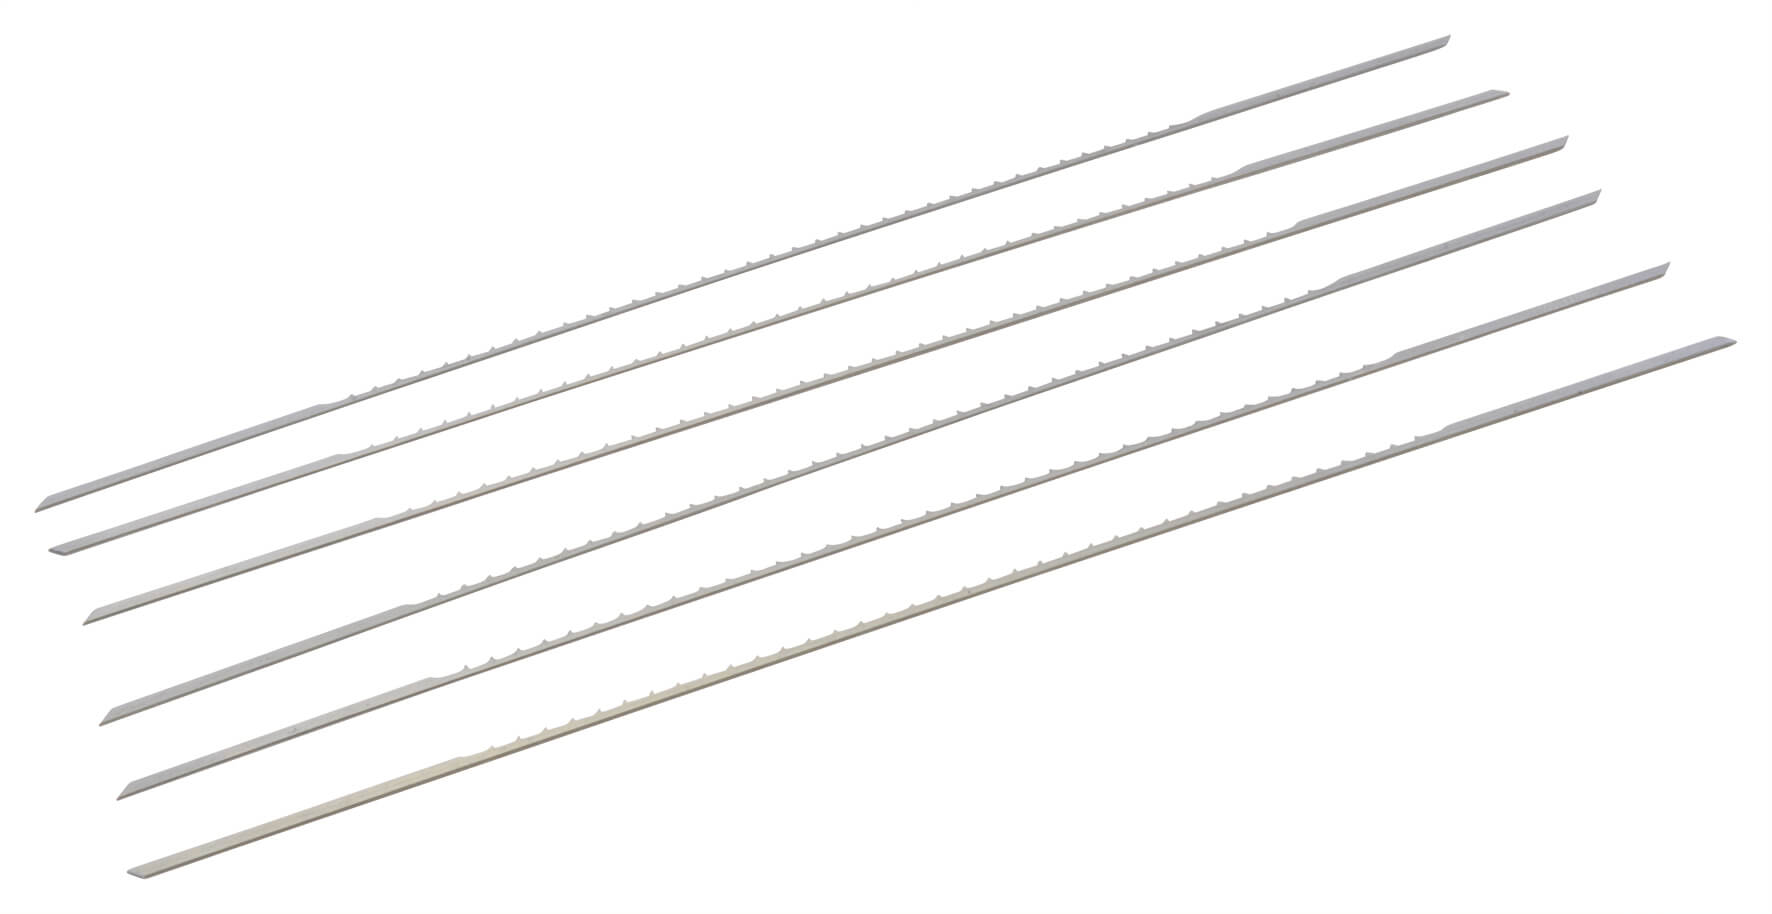 Olson Standard Fret Saw Blades - 8tpi (Pack of 6)